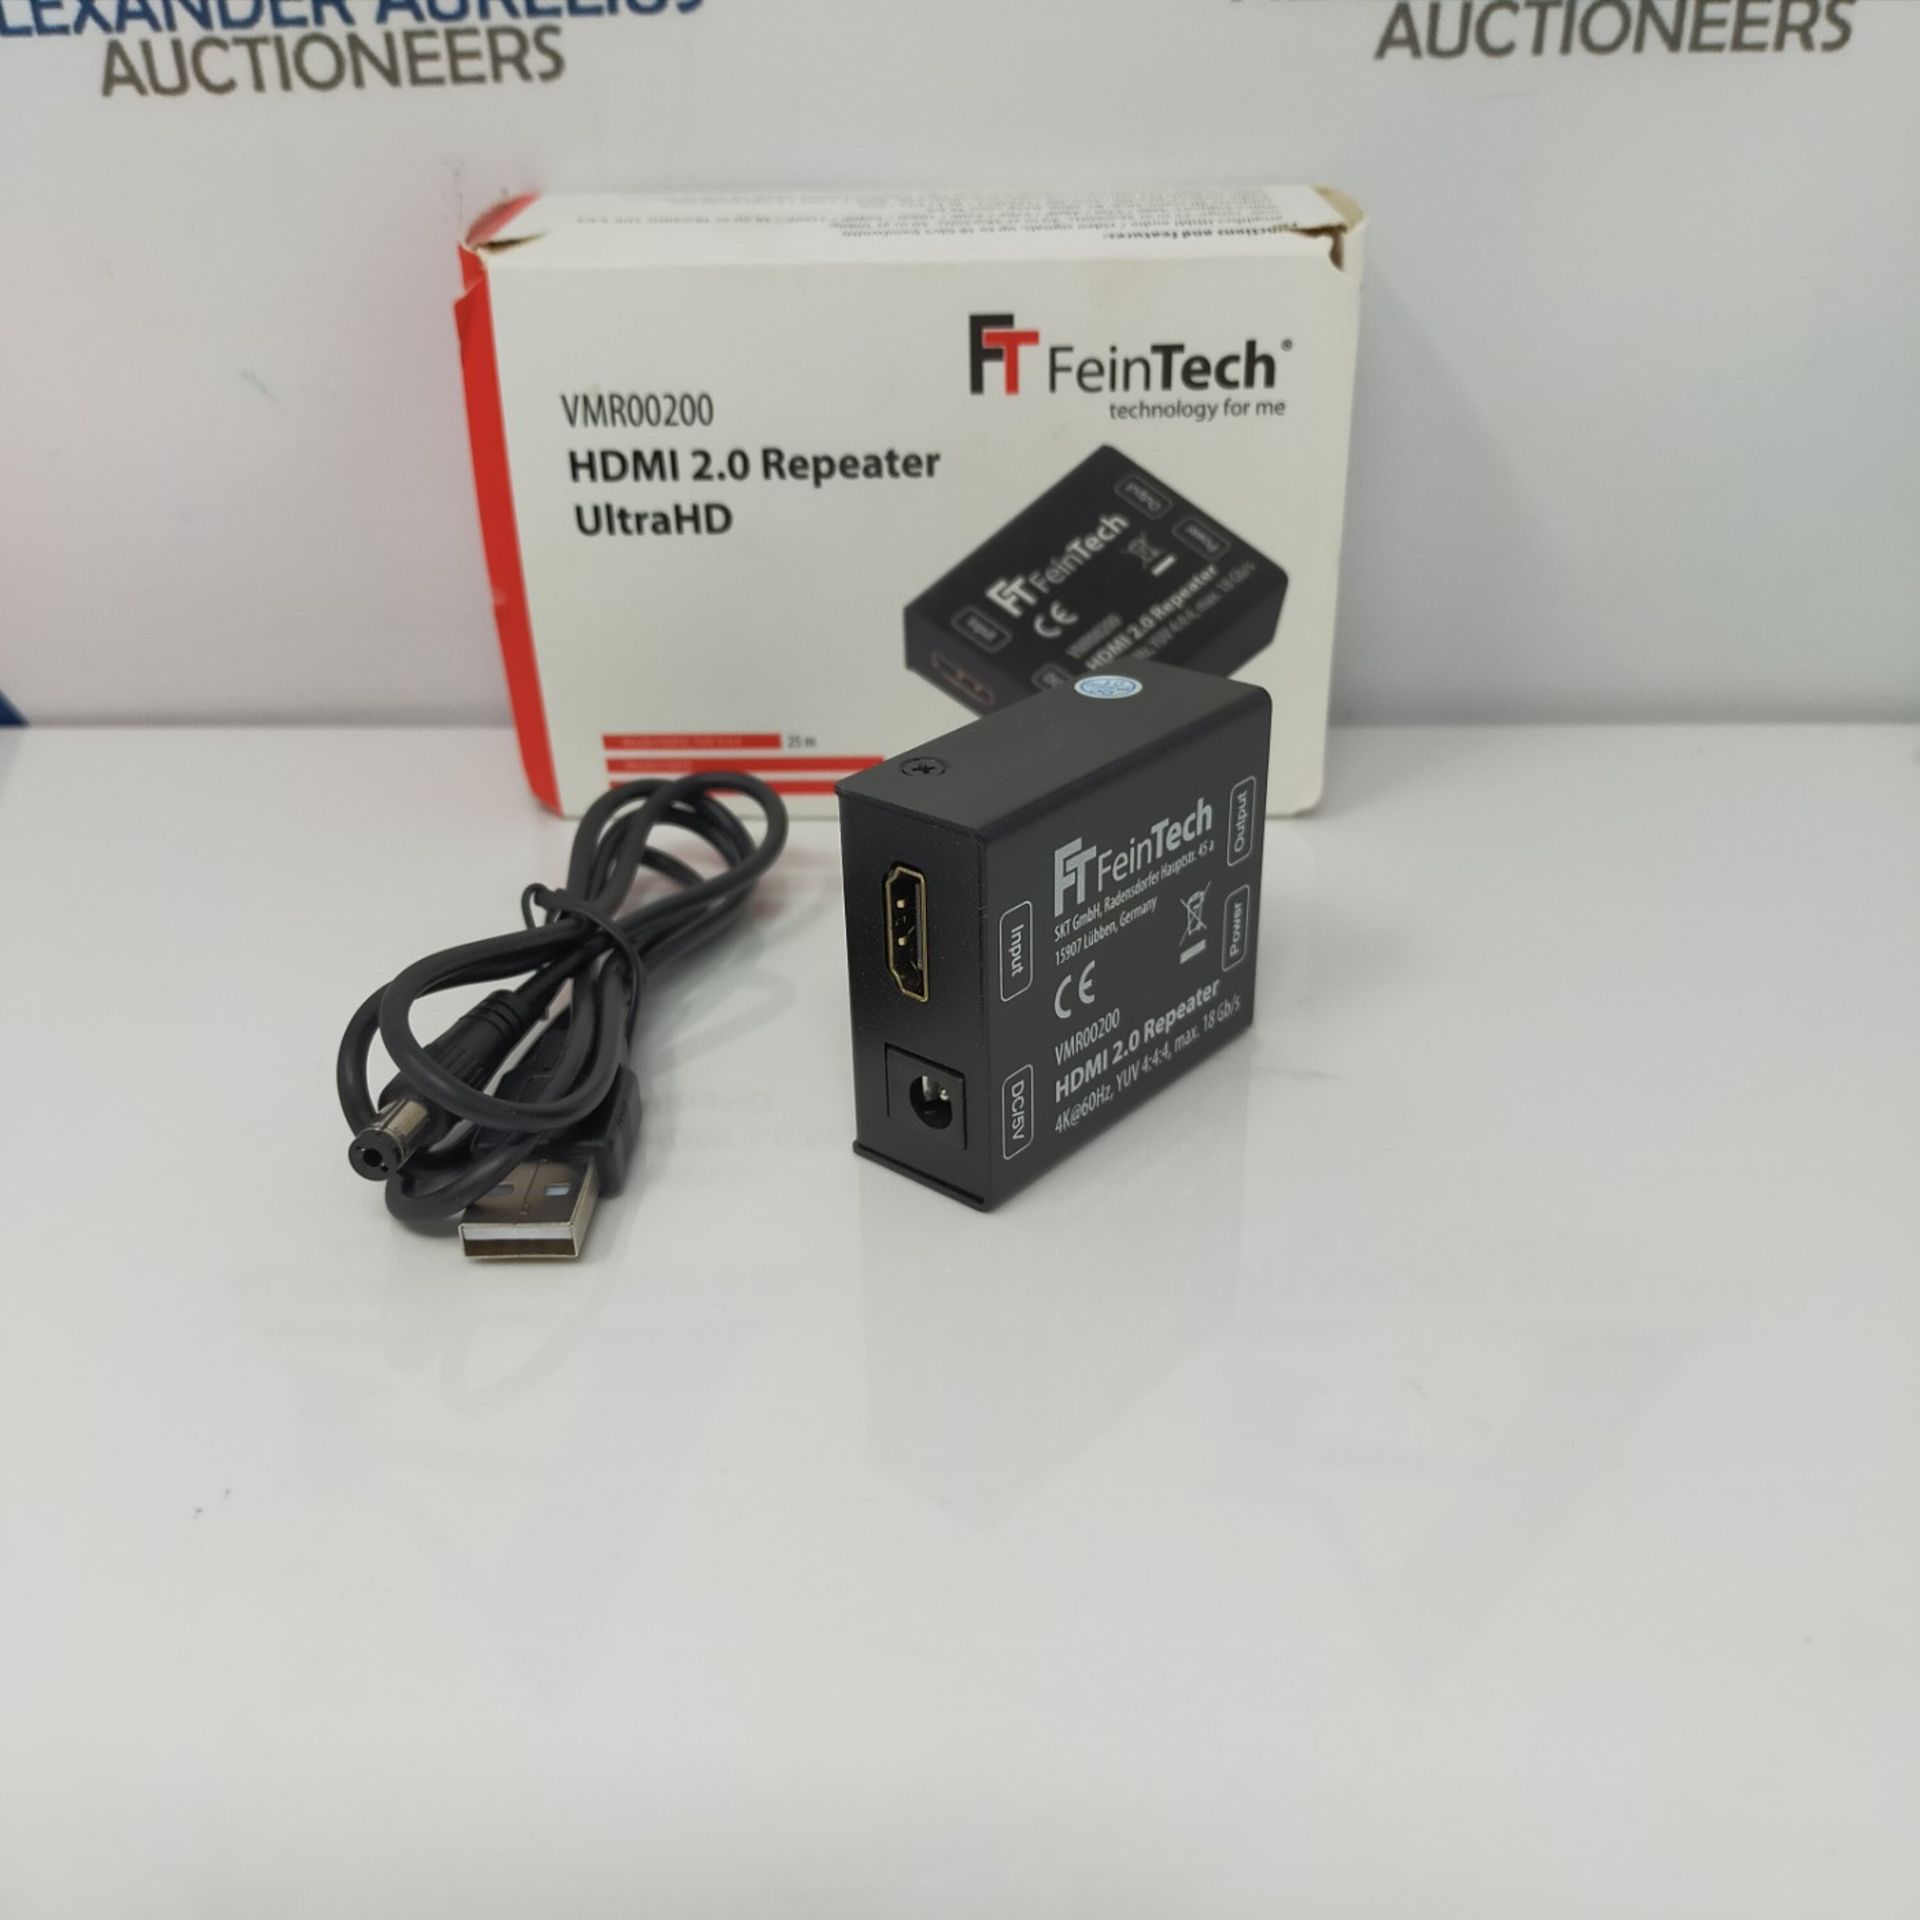 FeinTech VMR00200 HDMI 2.0 Repeater Signal-Amplifier Extender Booster 4K HDR Black - Image 2 of 3